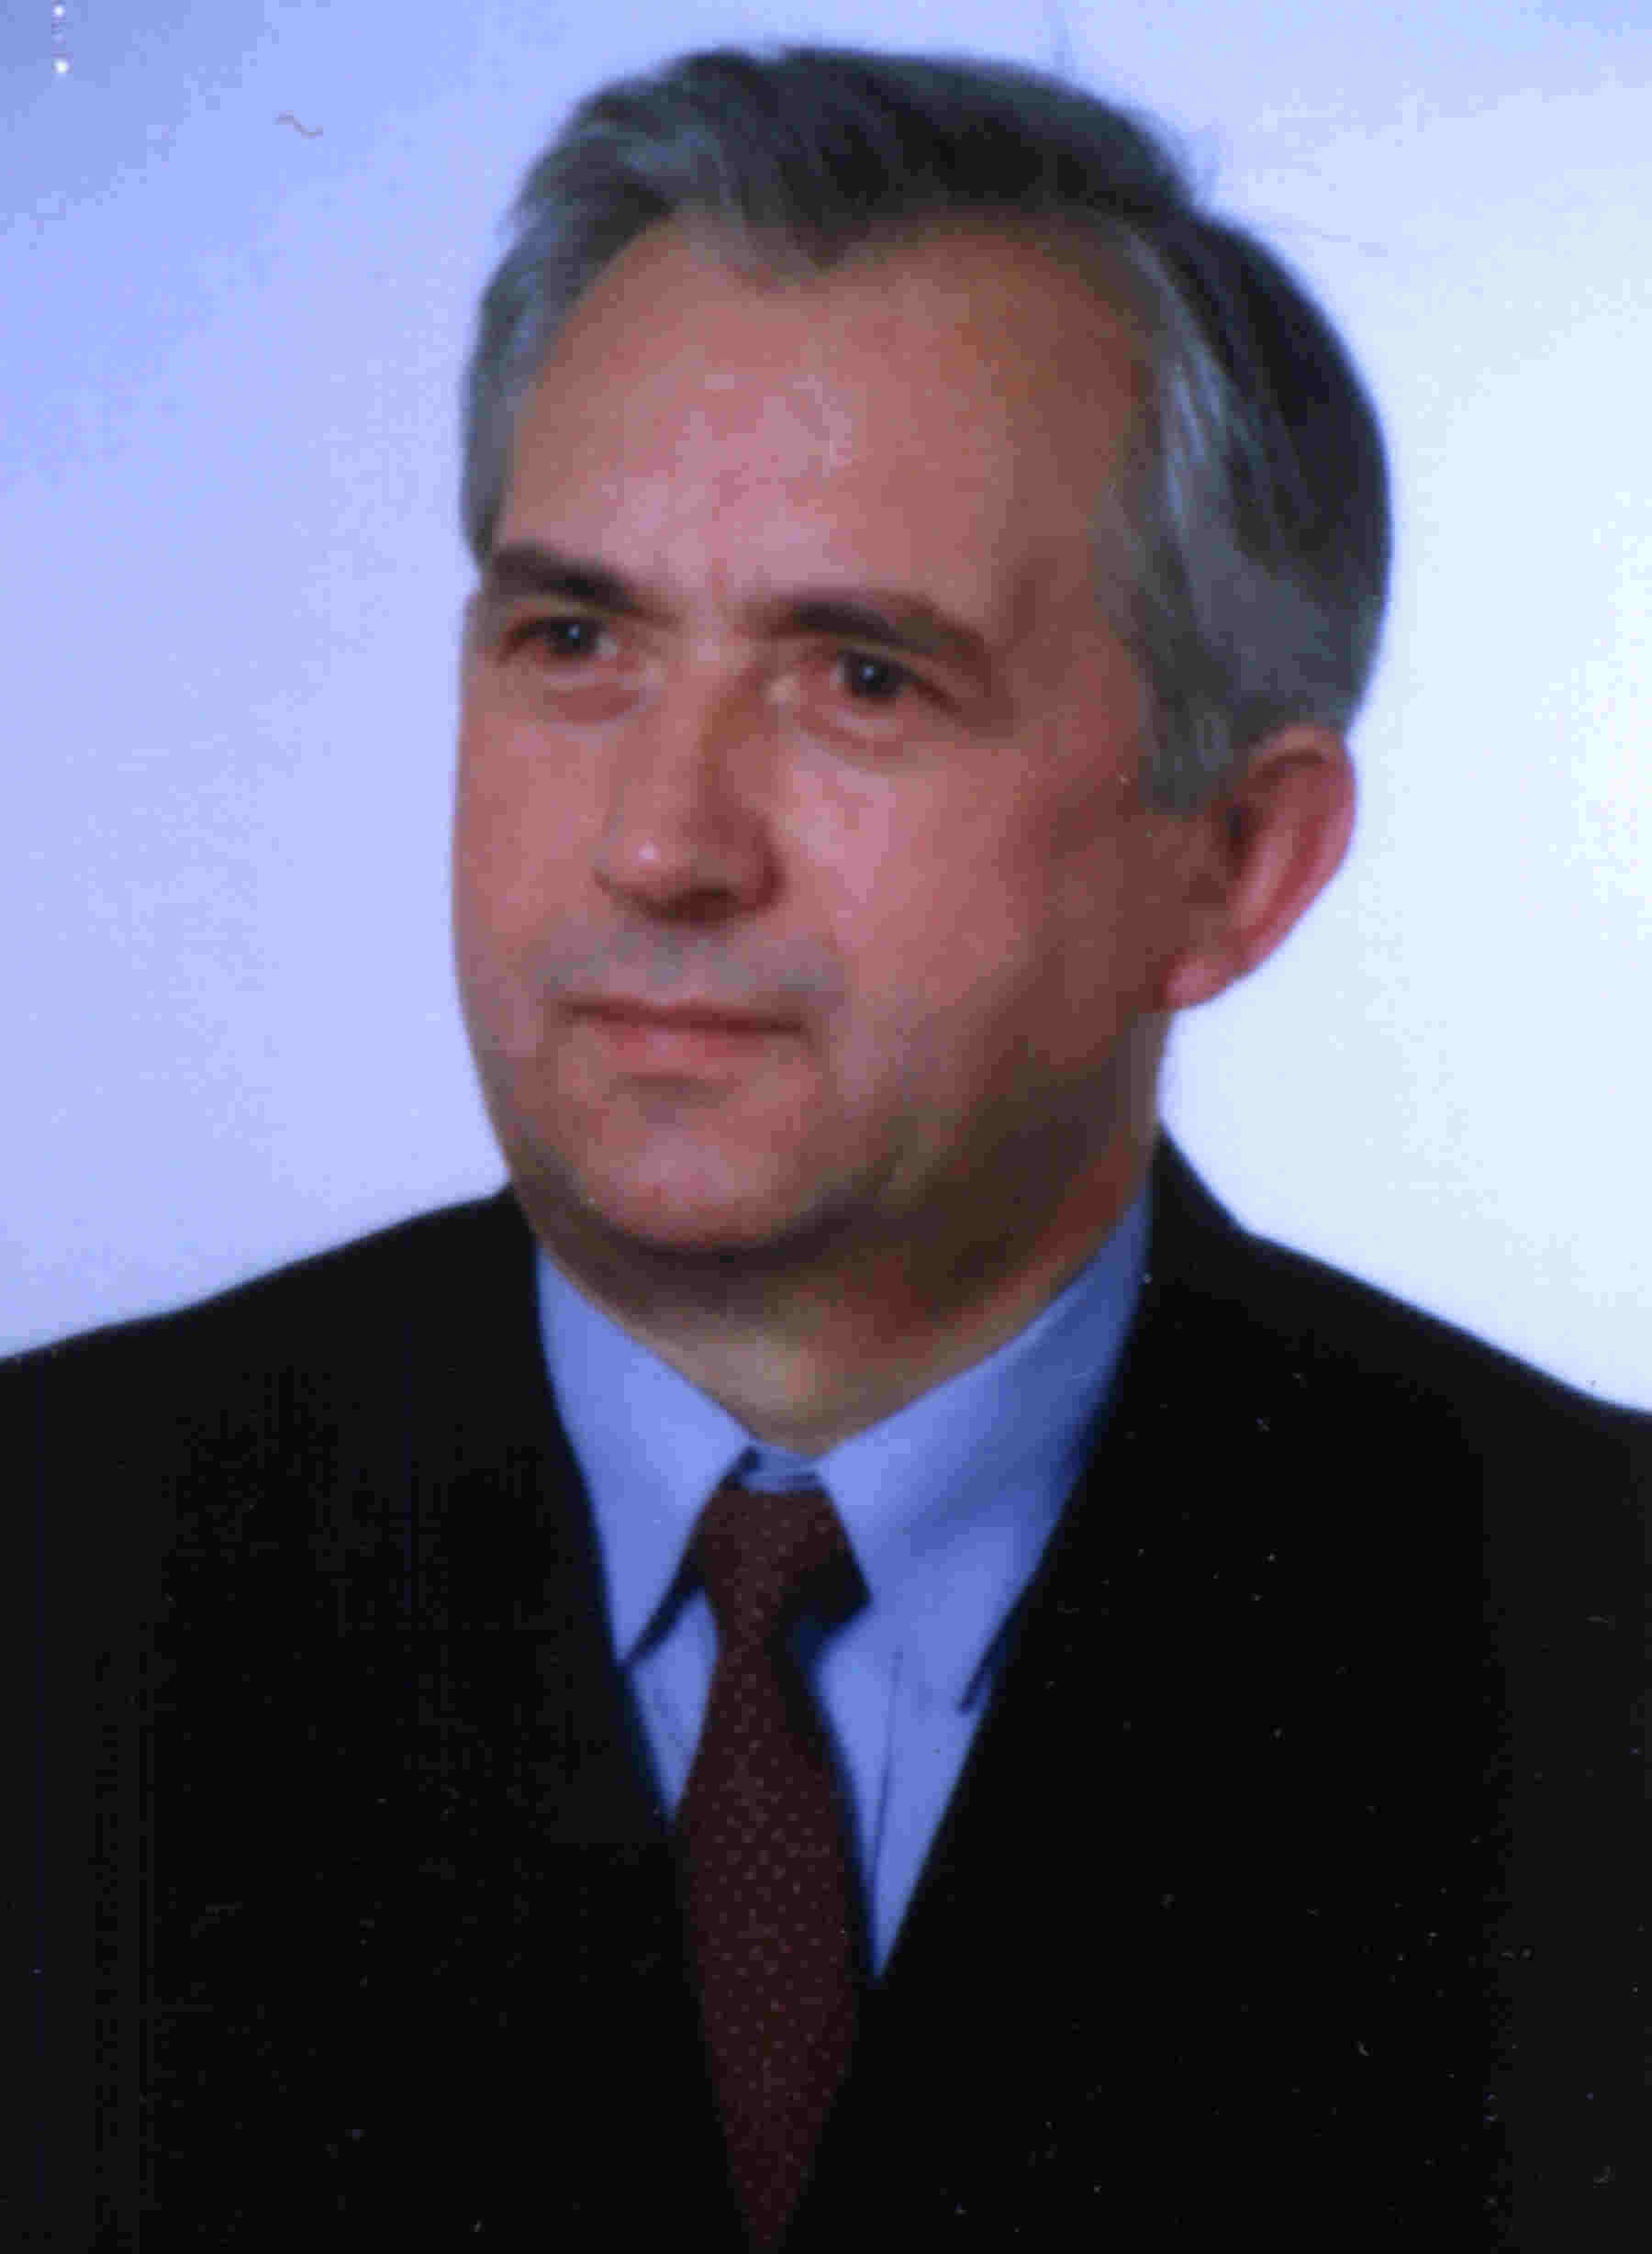 Stefan Murawski